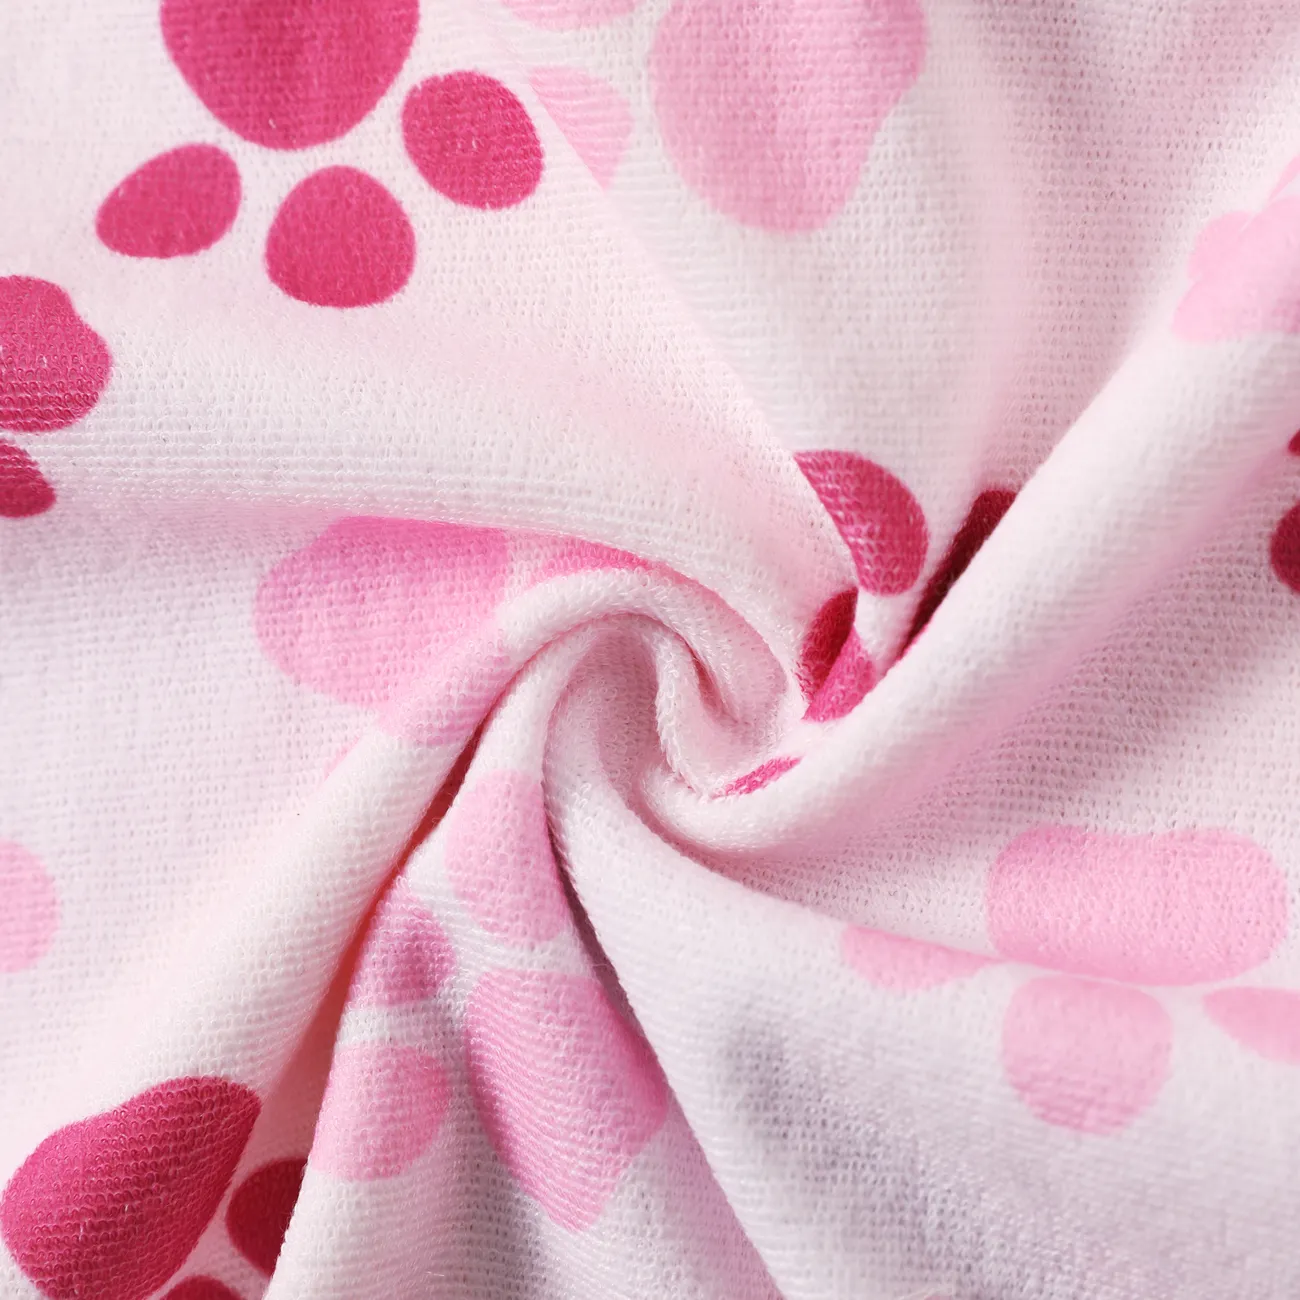 PAW Patrol Toddler Girl/Boy Swimming suit/Swimming Trunks/Hooded Towel Pink big image 1